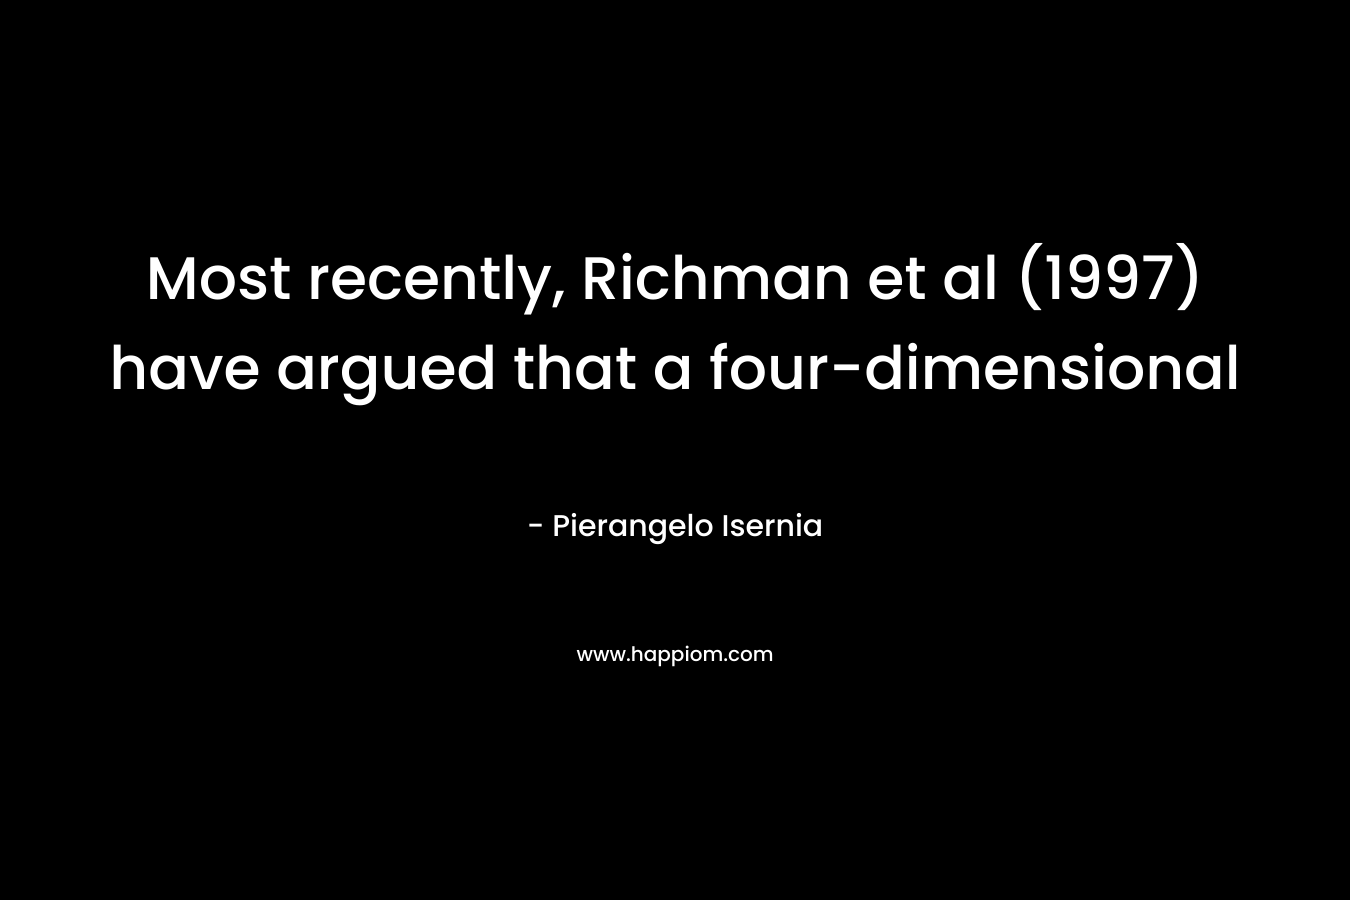 Most recently, Richman et al (1997) have argued that a four-dimensional